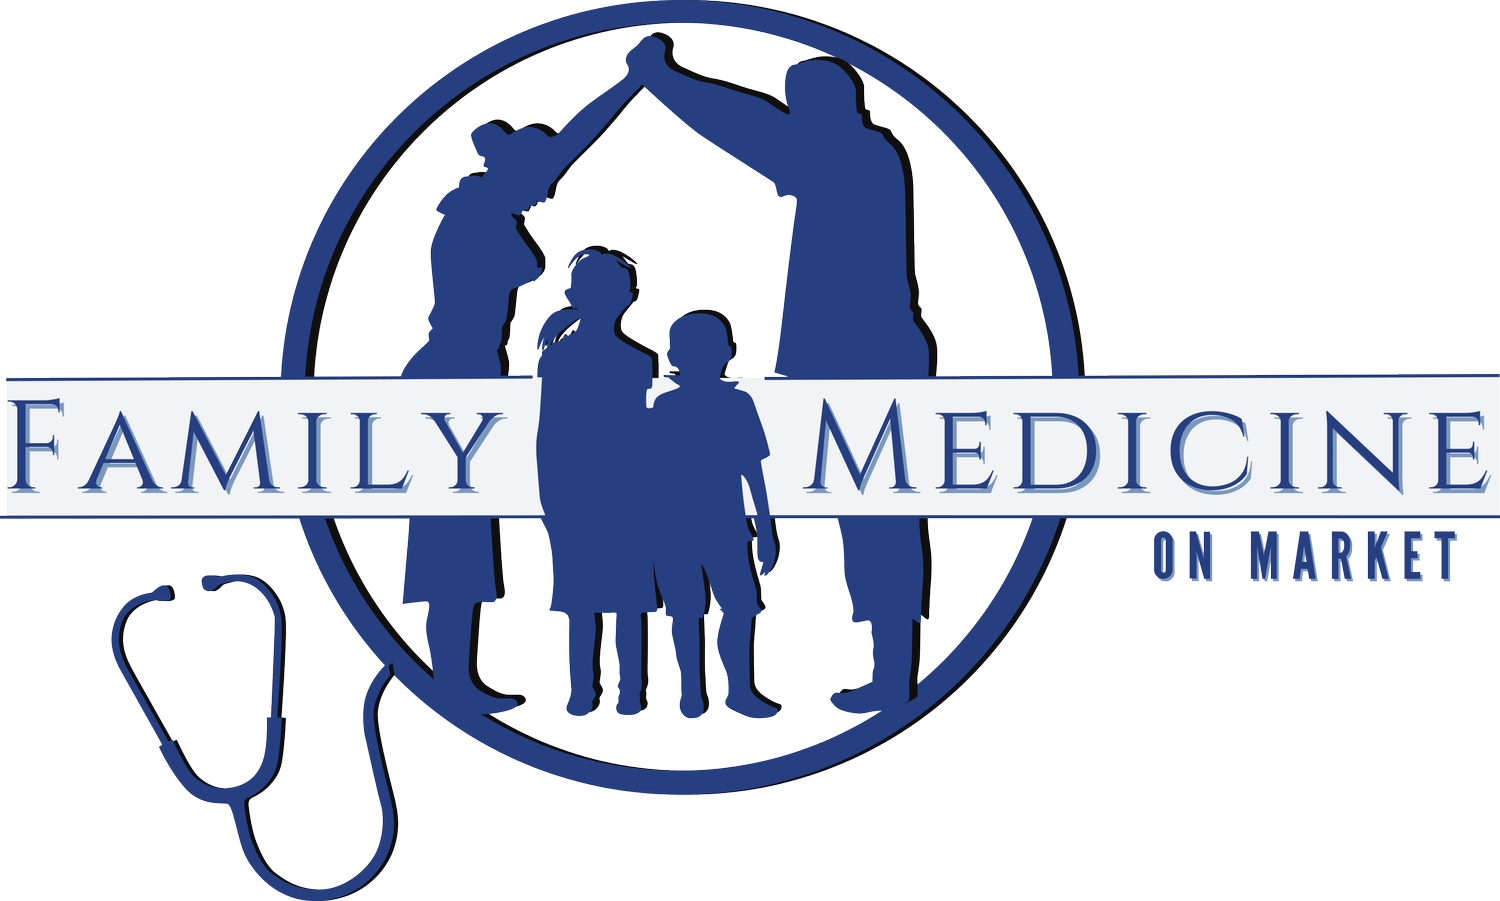 Family Medicine On Market